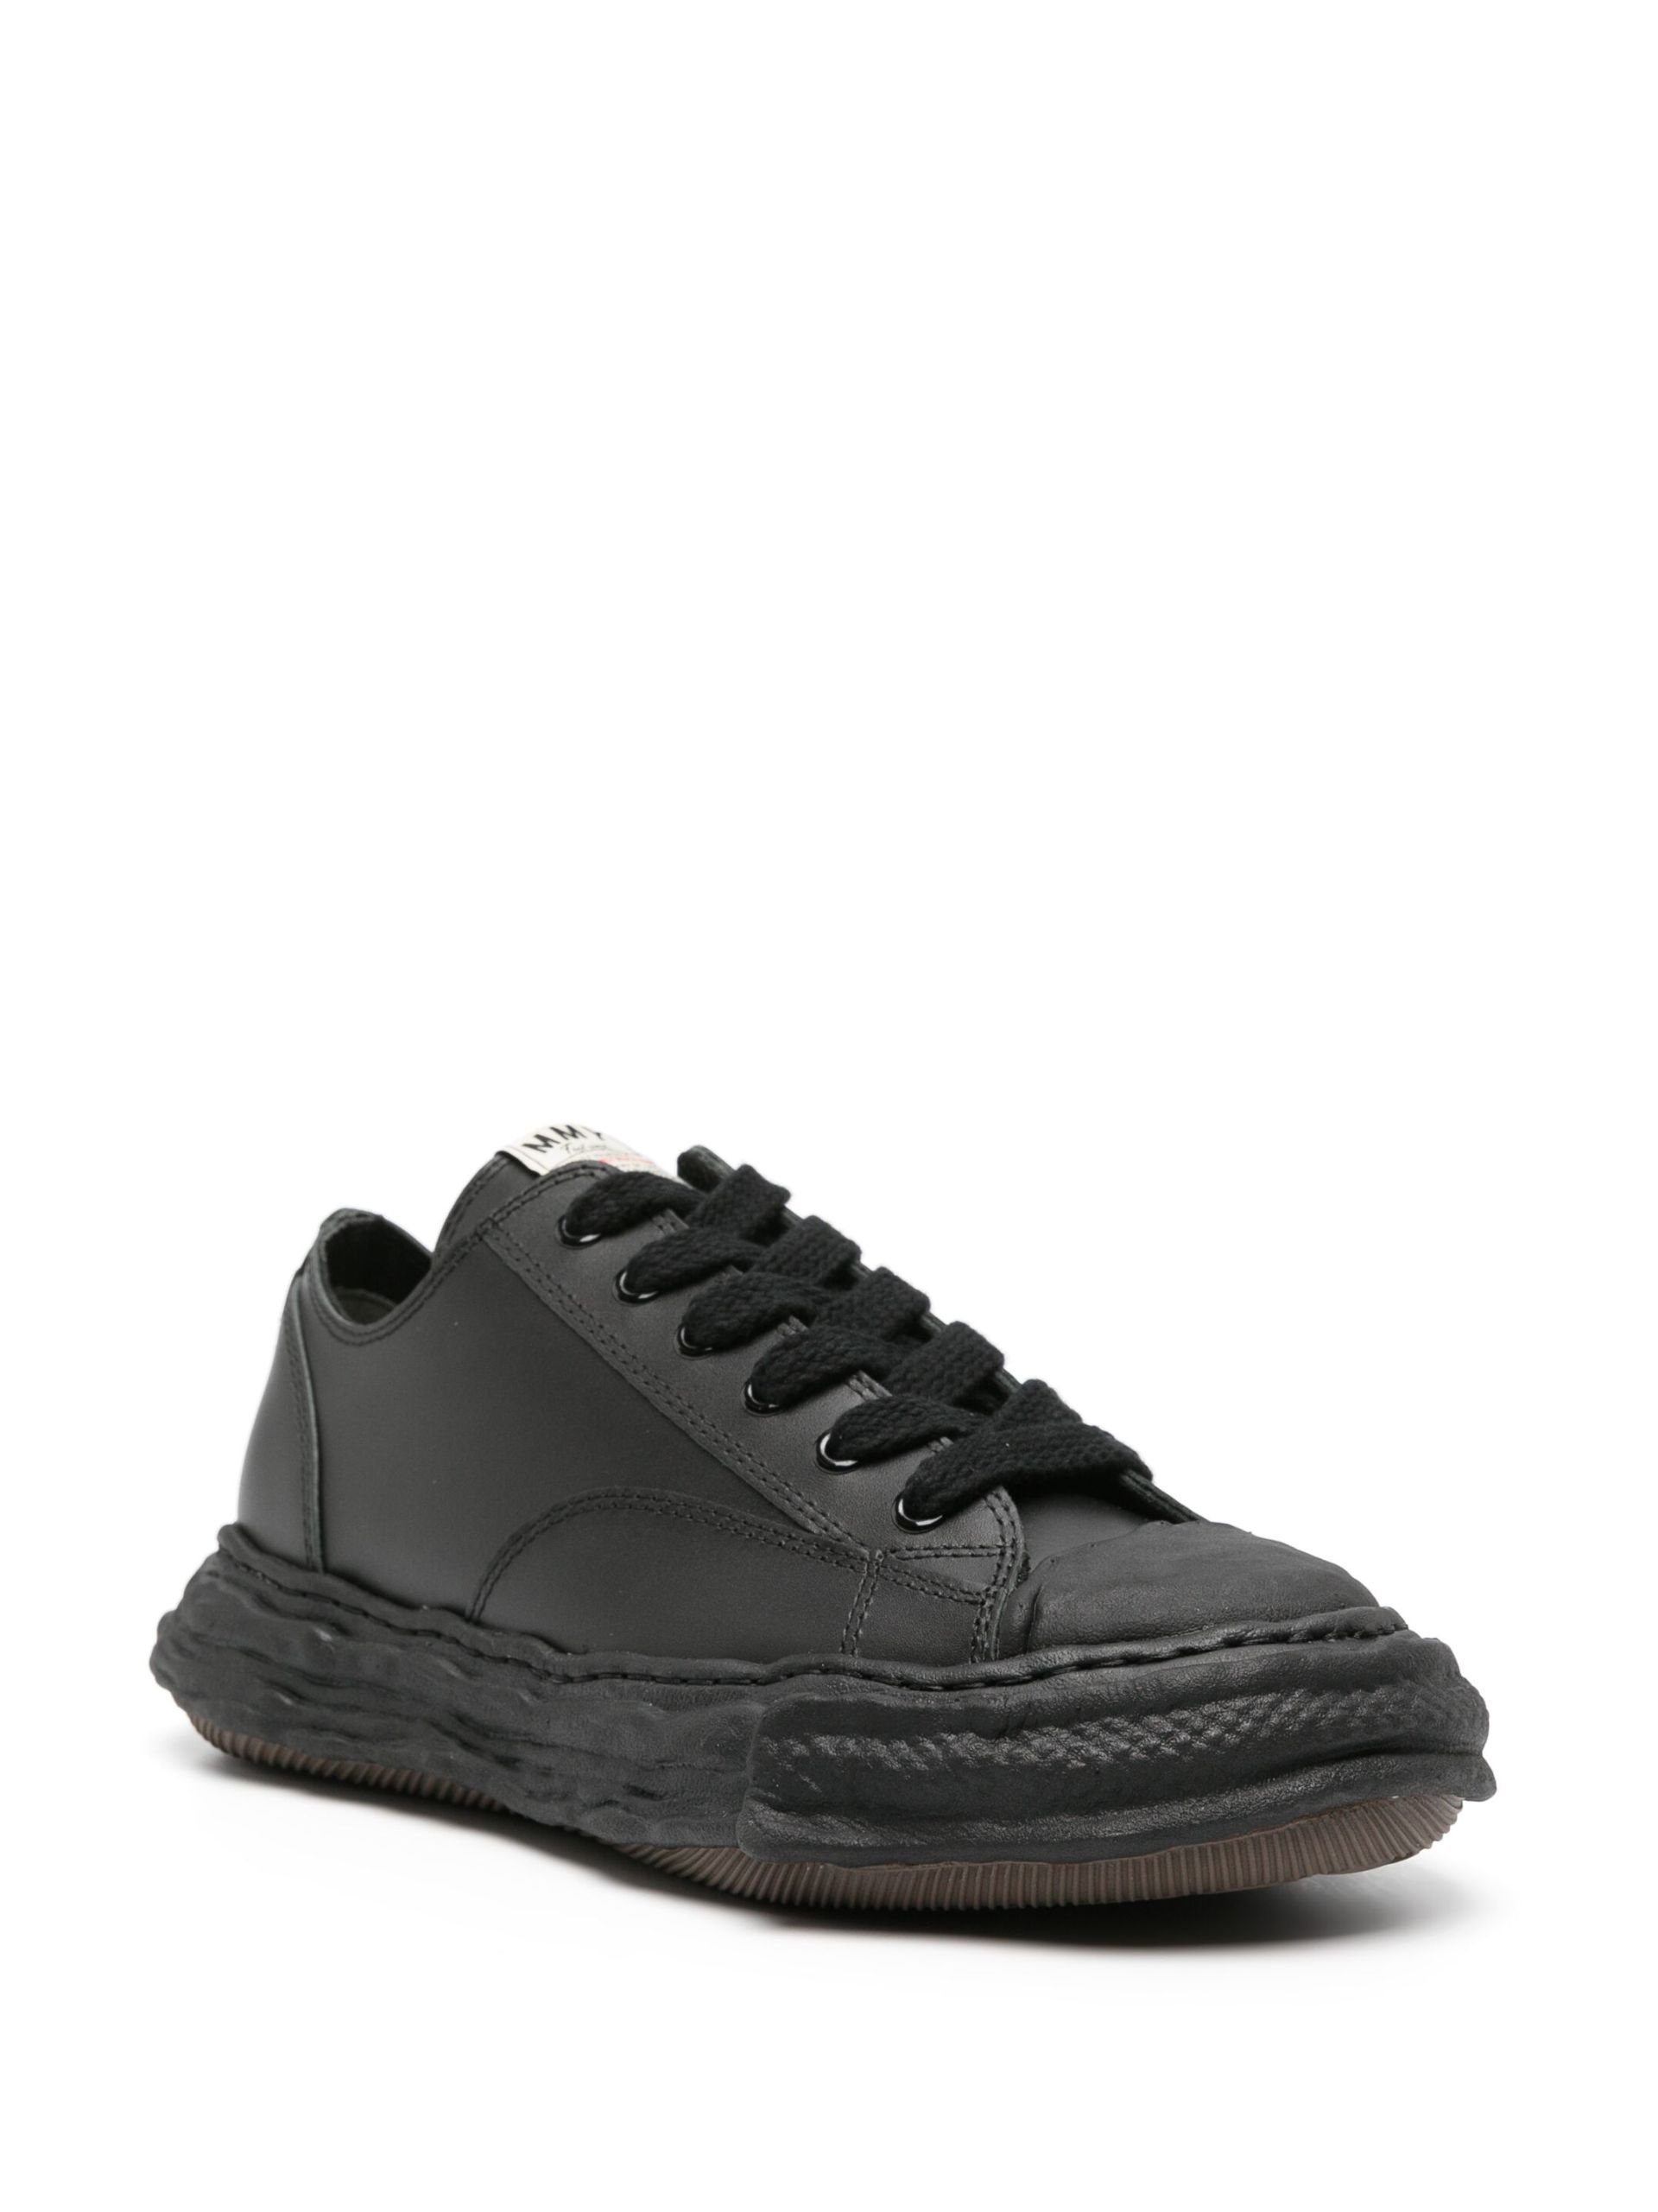 Black Peterson 23 Original Sole Leather Sneakers - 2